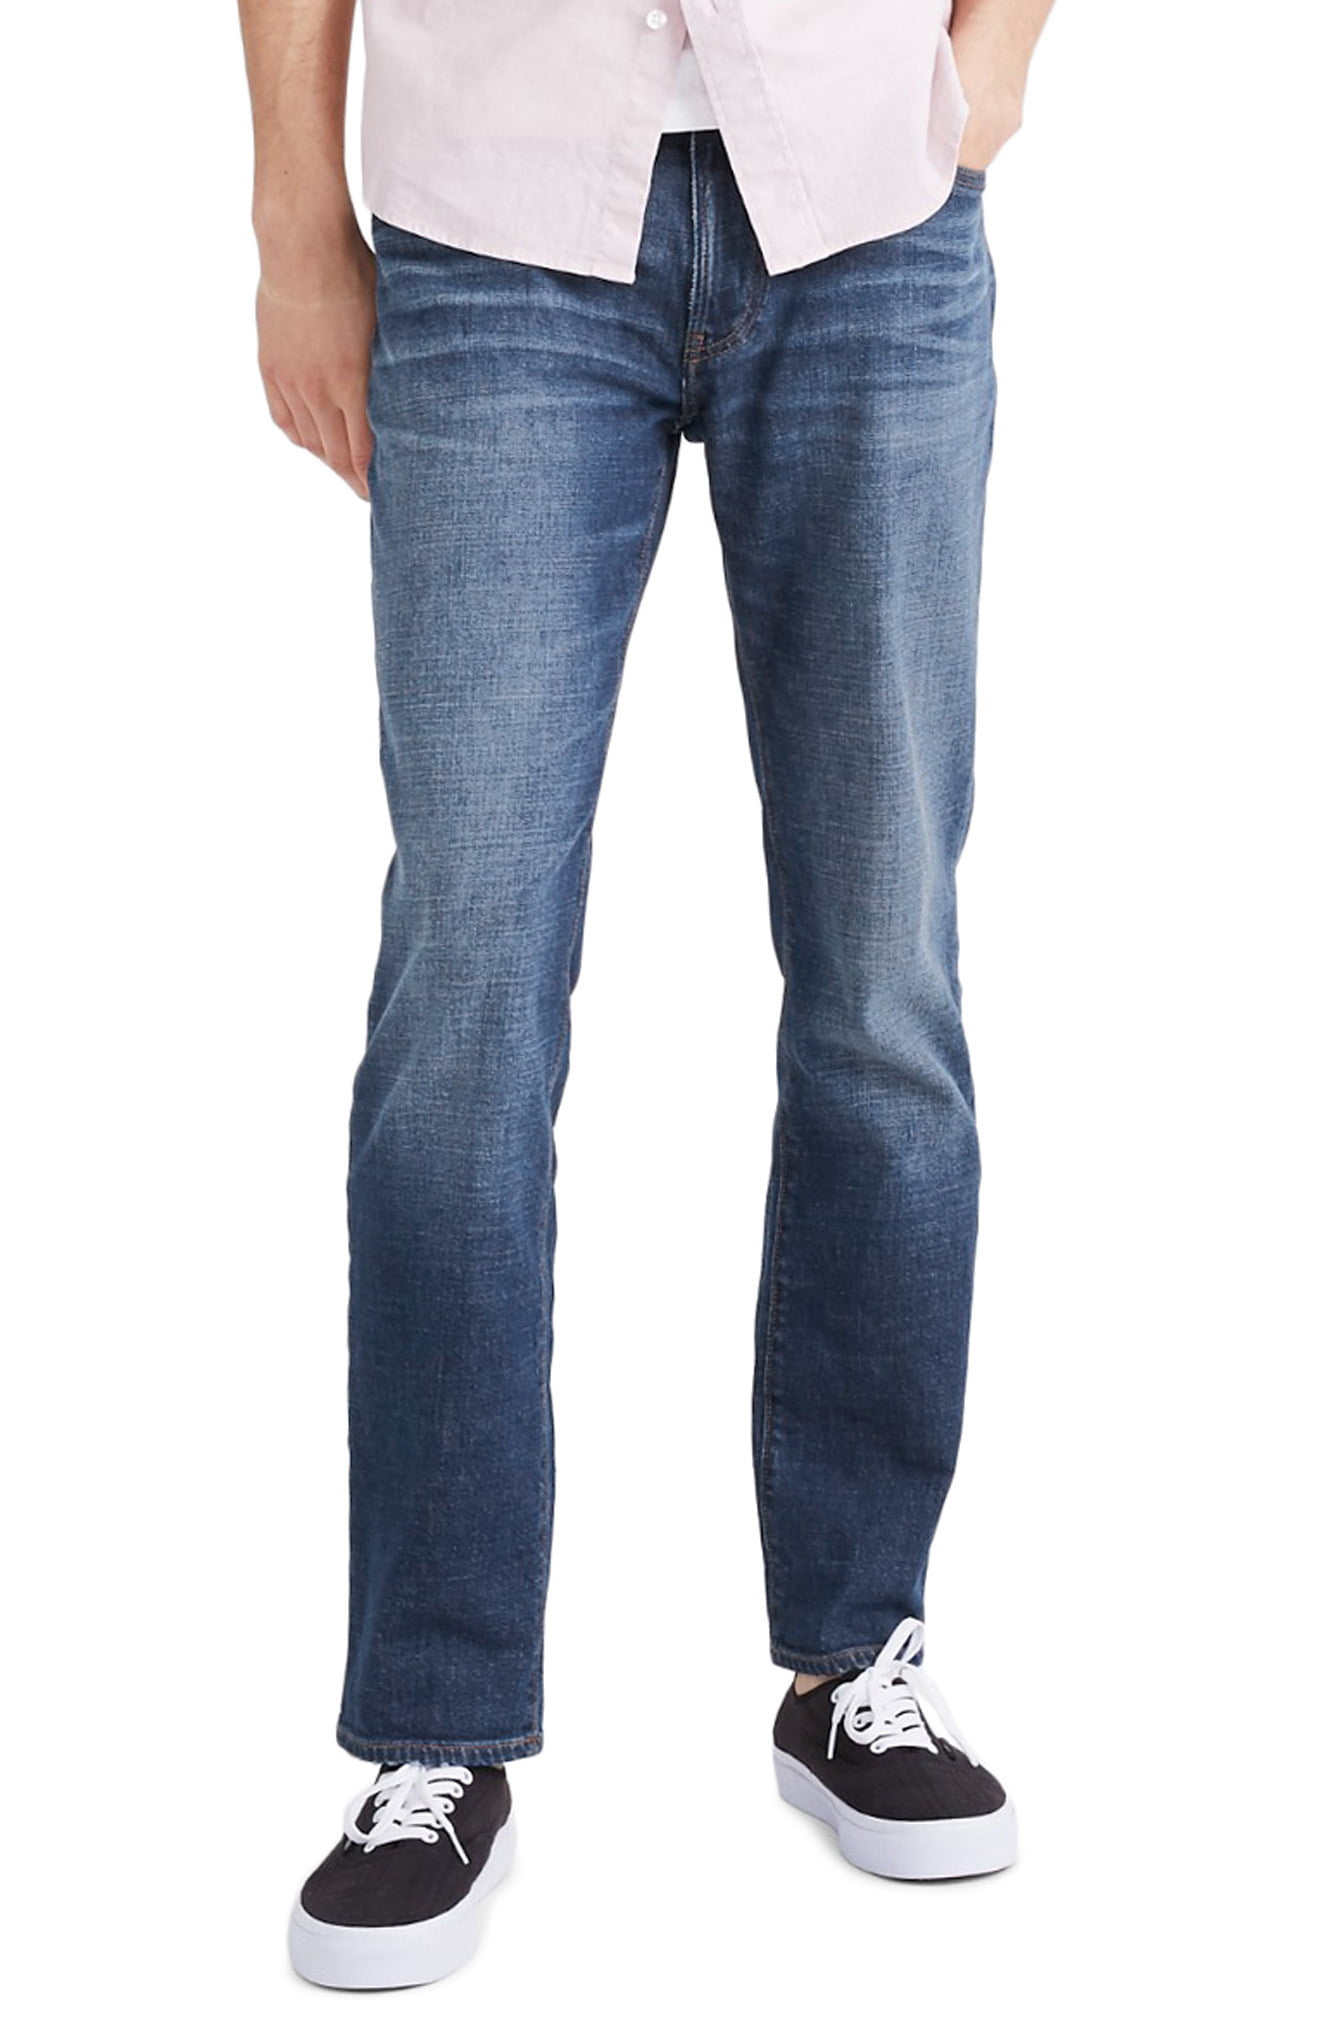 31x32 jeans size